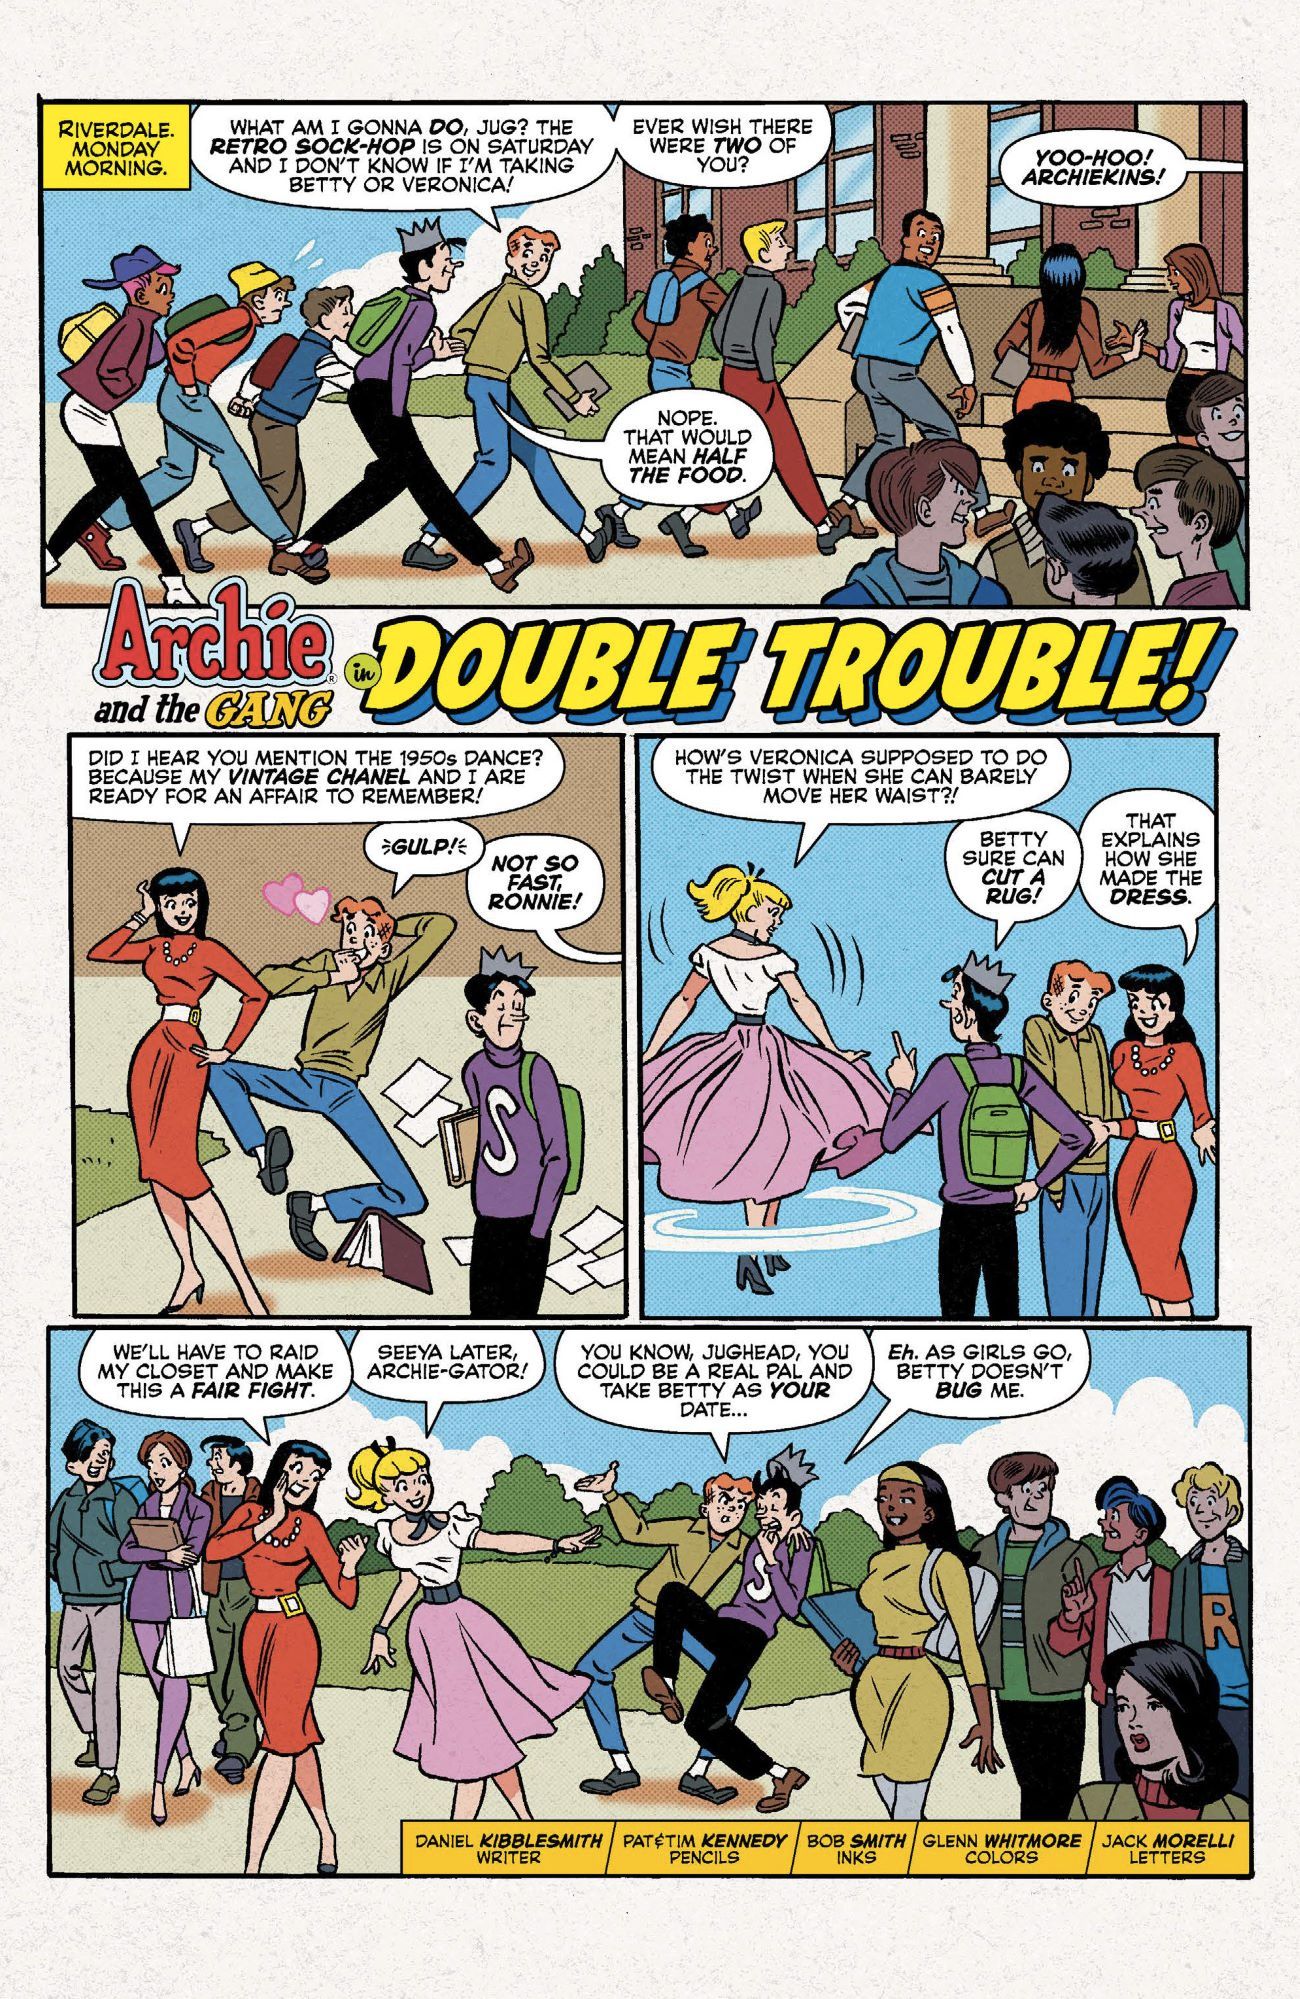 Archie Meets Riverdale Comic Preview Page 1